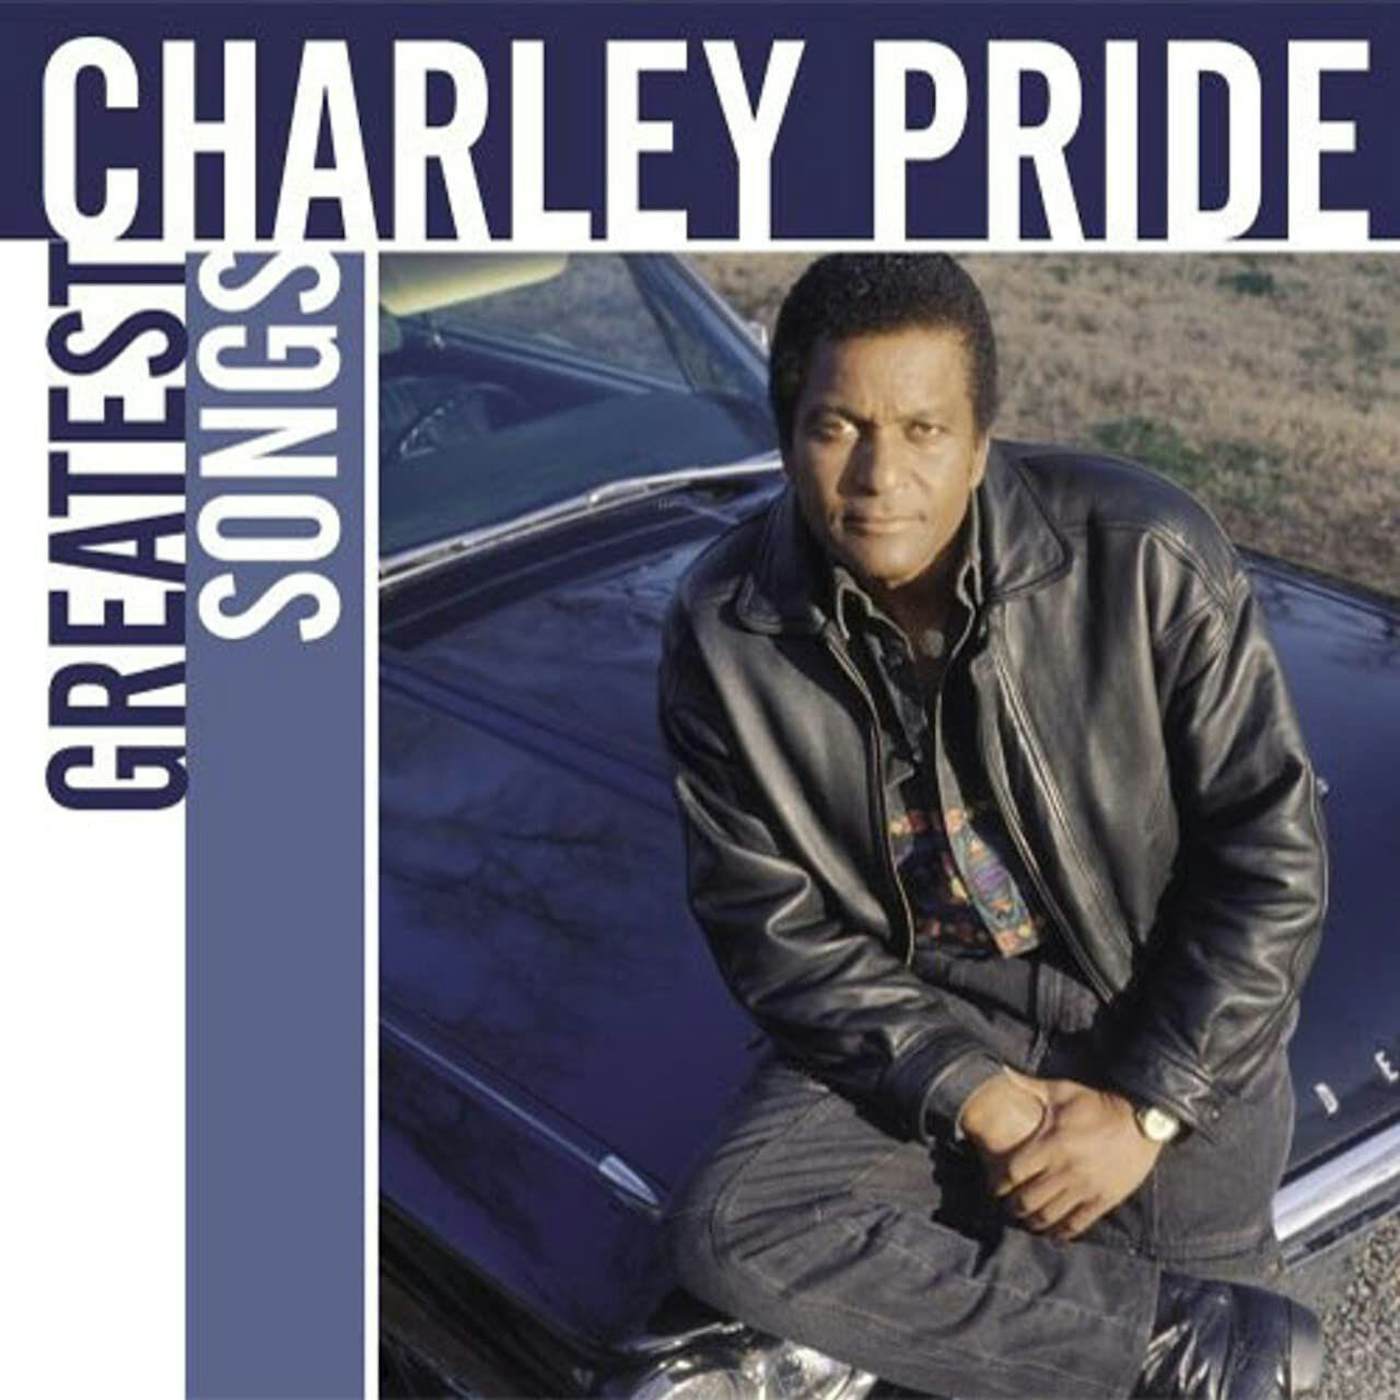 Charley Pride Greatest Songs Vinyl Record